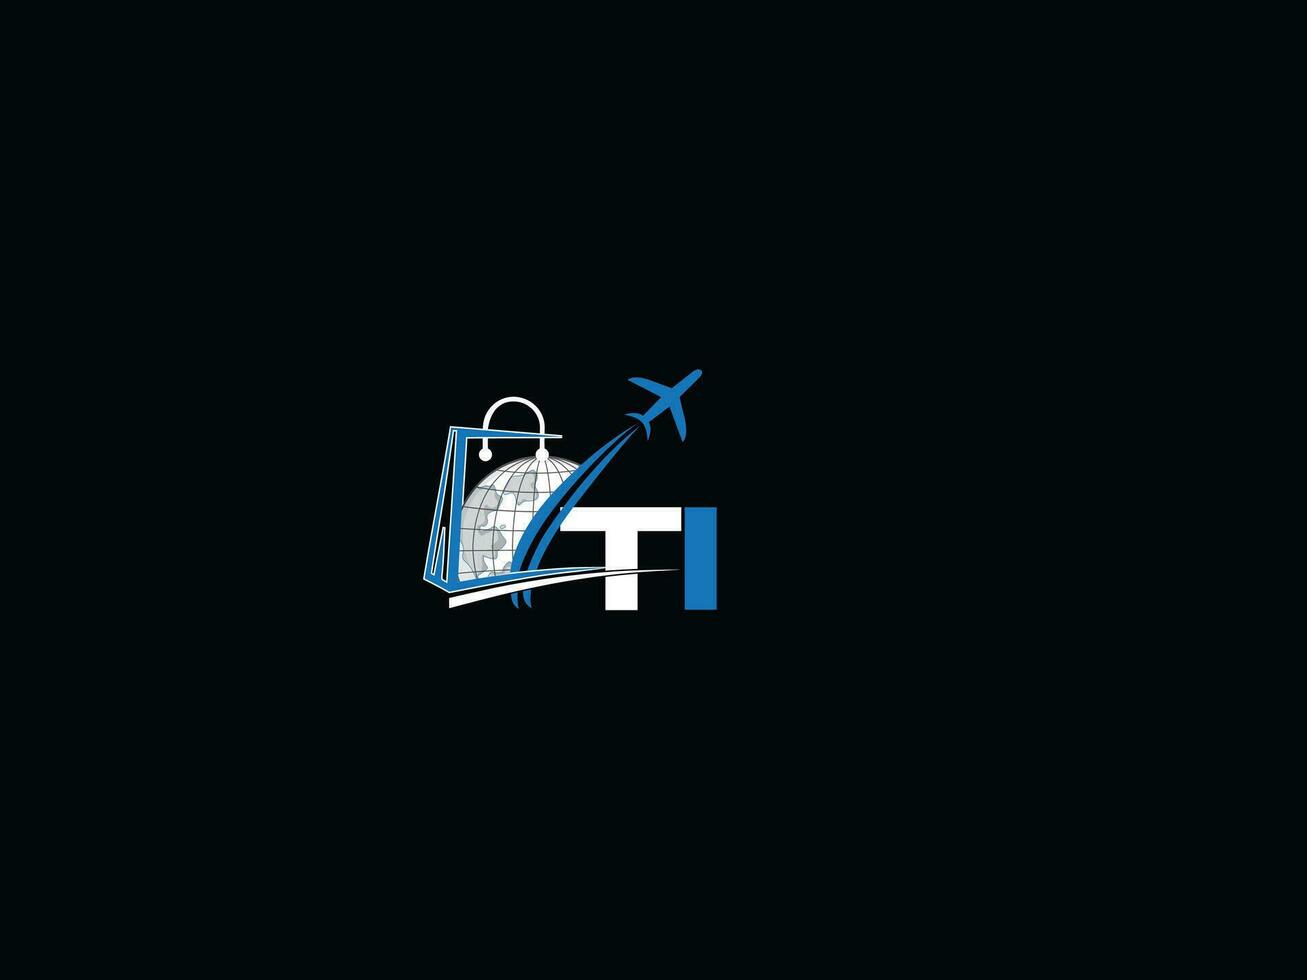 bunt global ti Reise Logo Symbol, minimalistisch Luft ti Logo Brief Design vektor